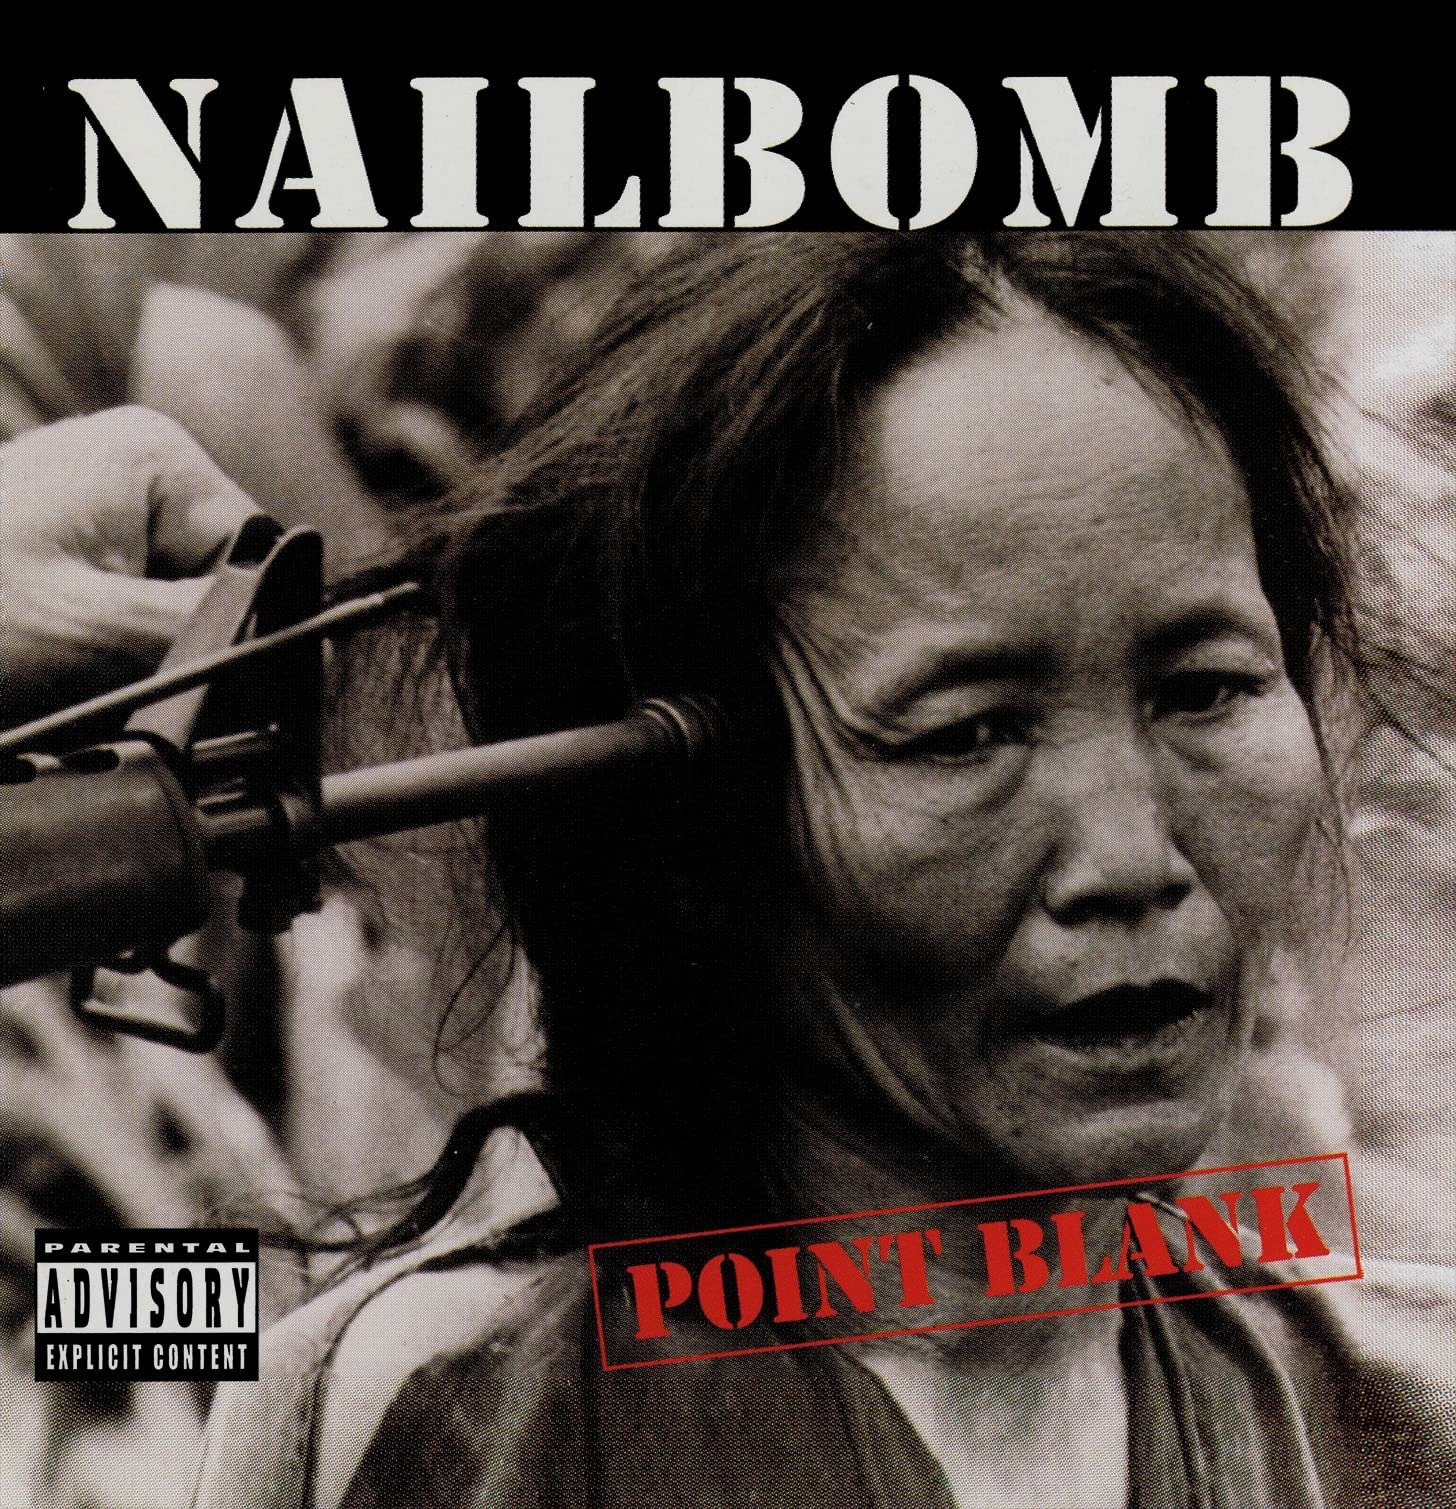 CD Shop - NAILBOMB POINT BLANK